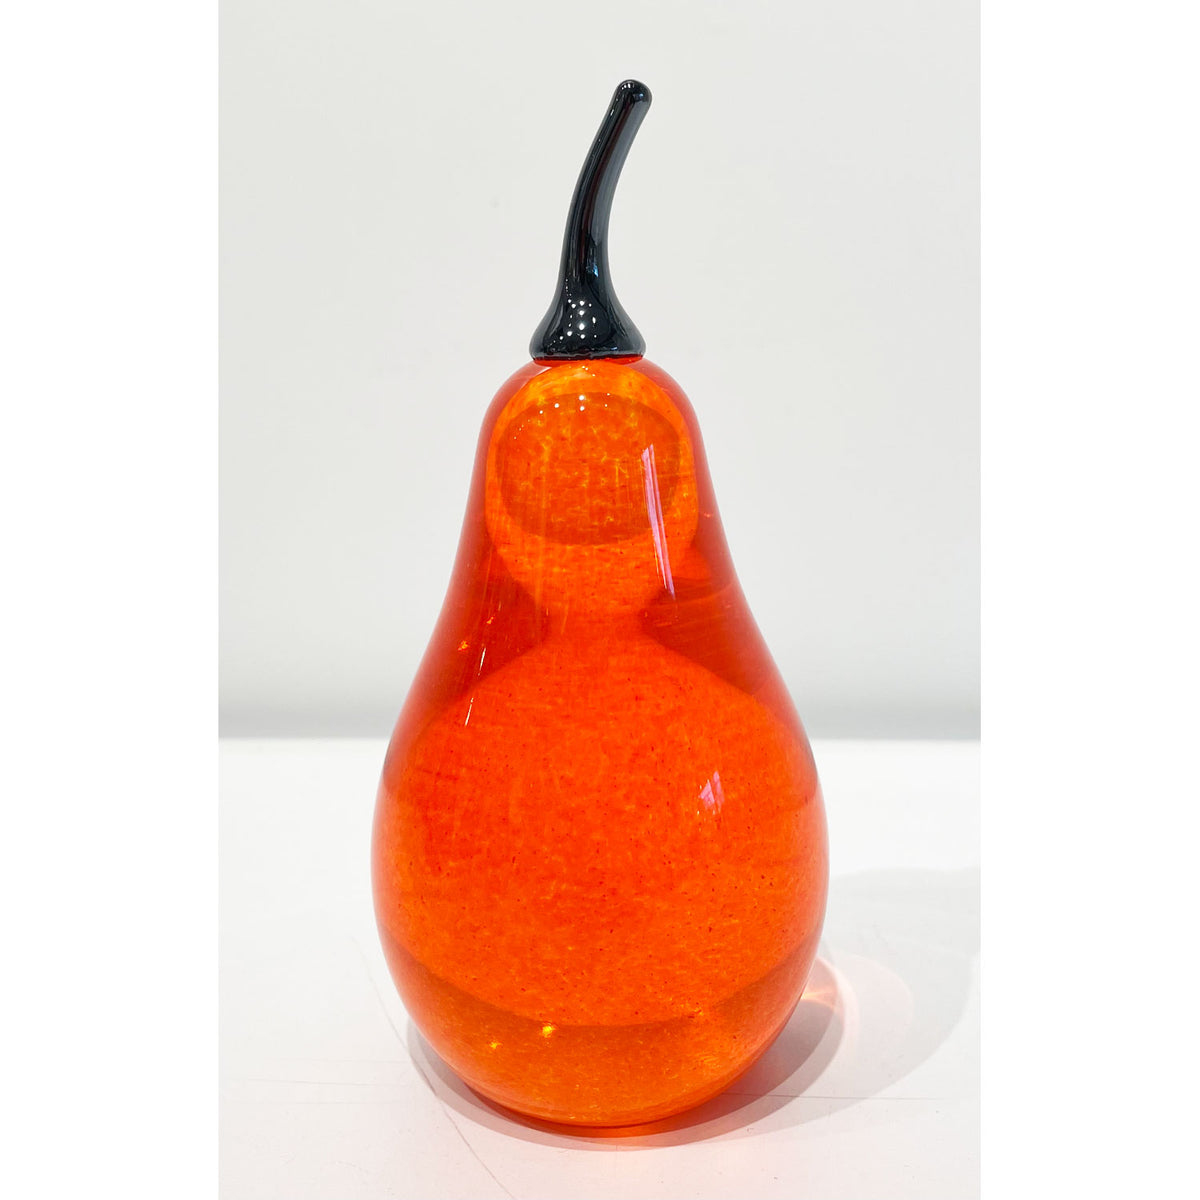 Mark Armstrong - Orange Pear, 5.5"